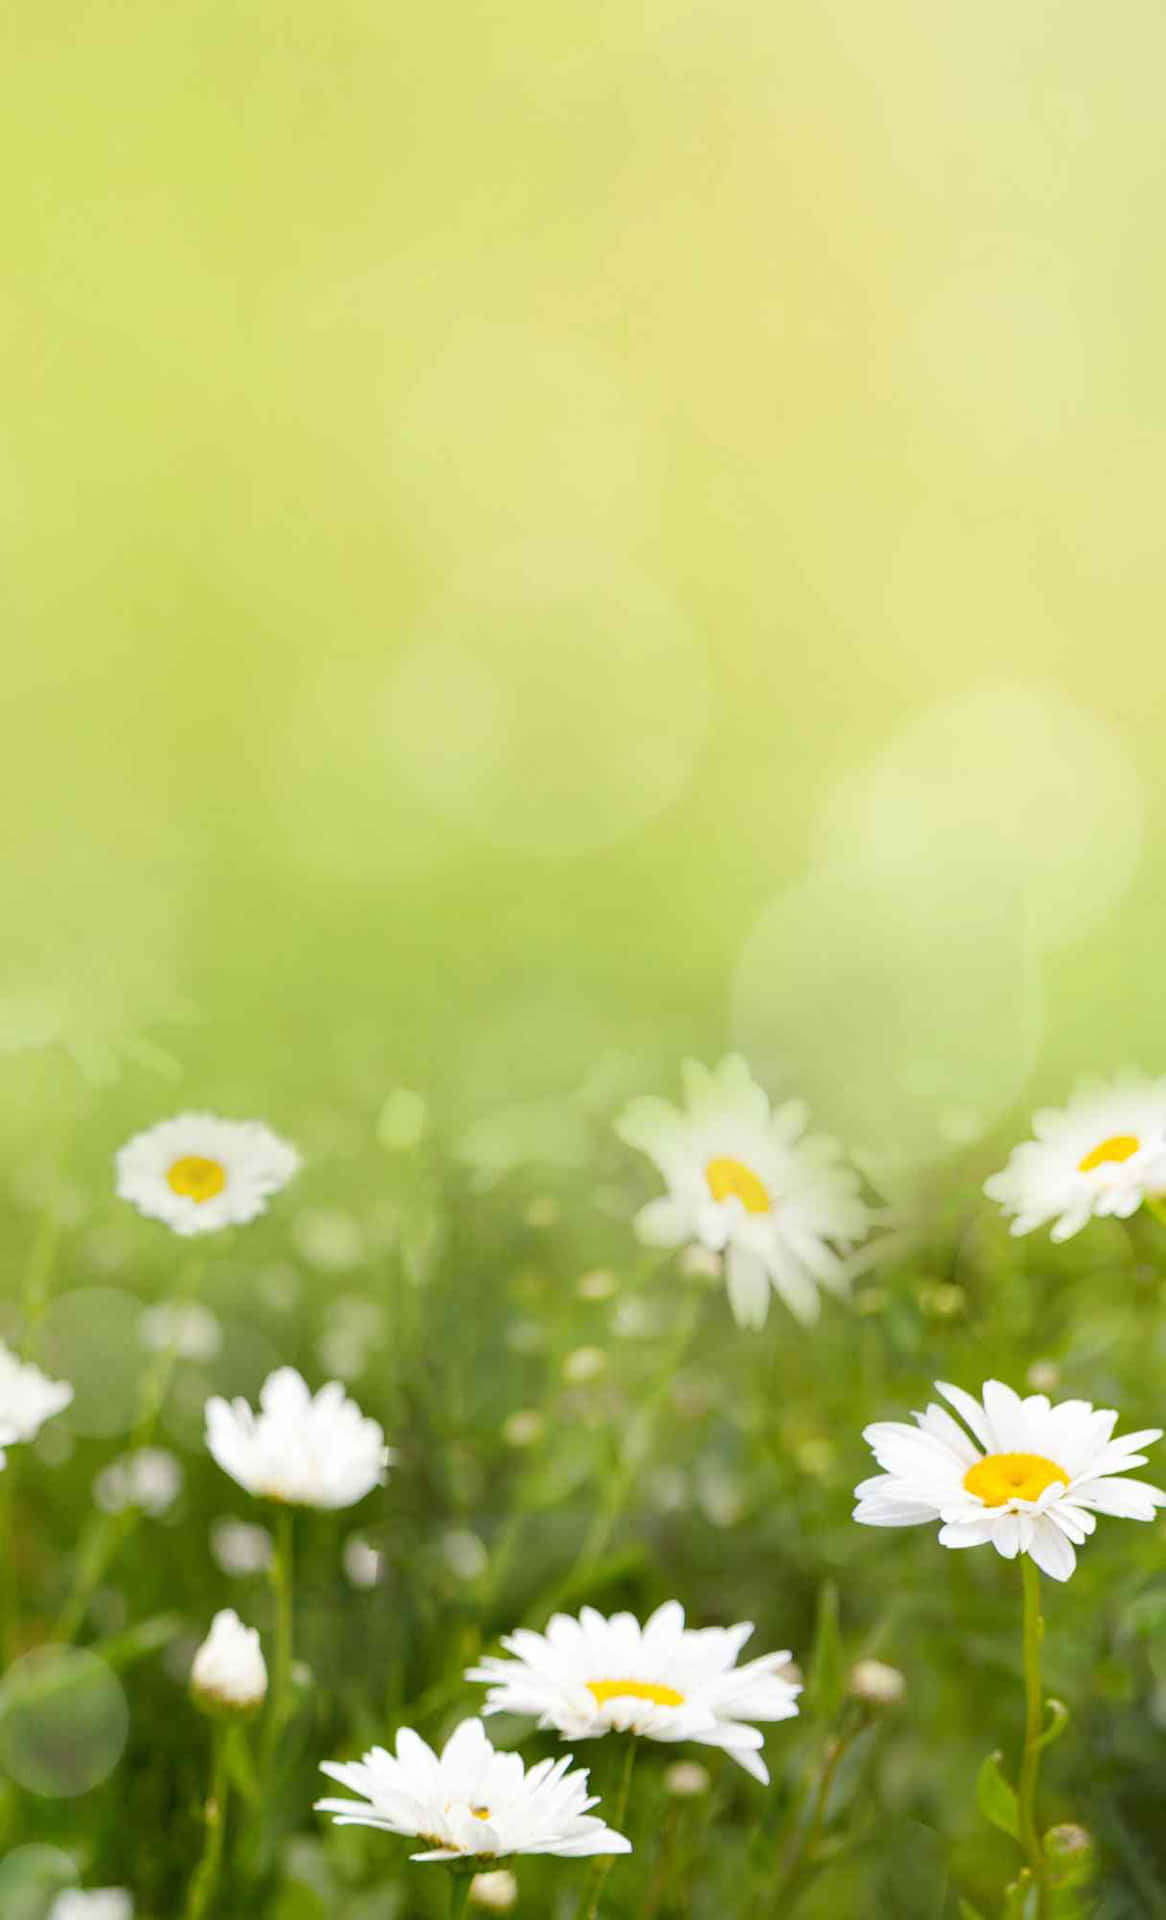 Springtime Daisy Field Blur Background Wallpaper